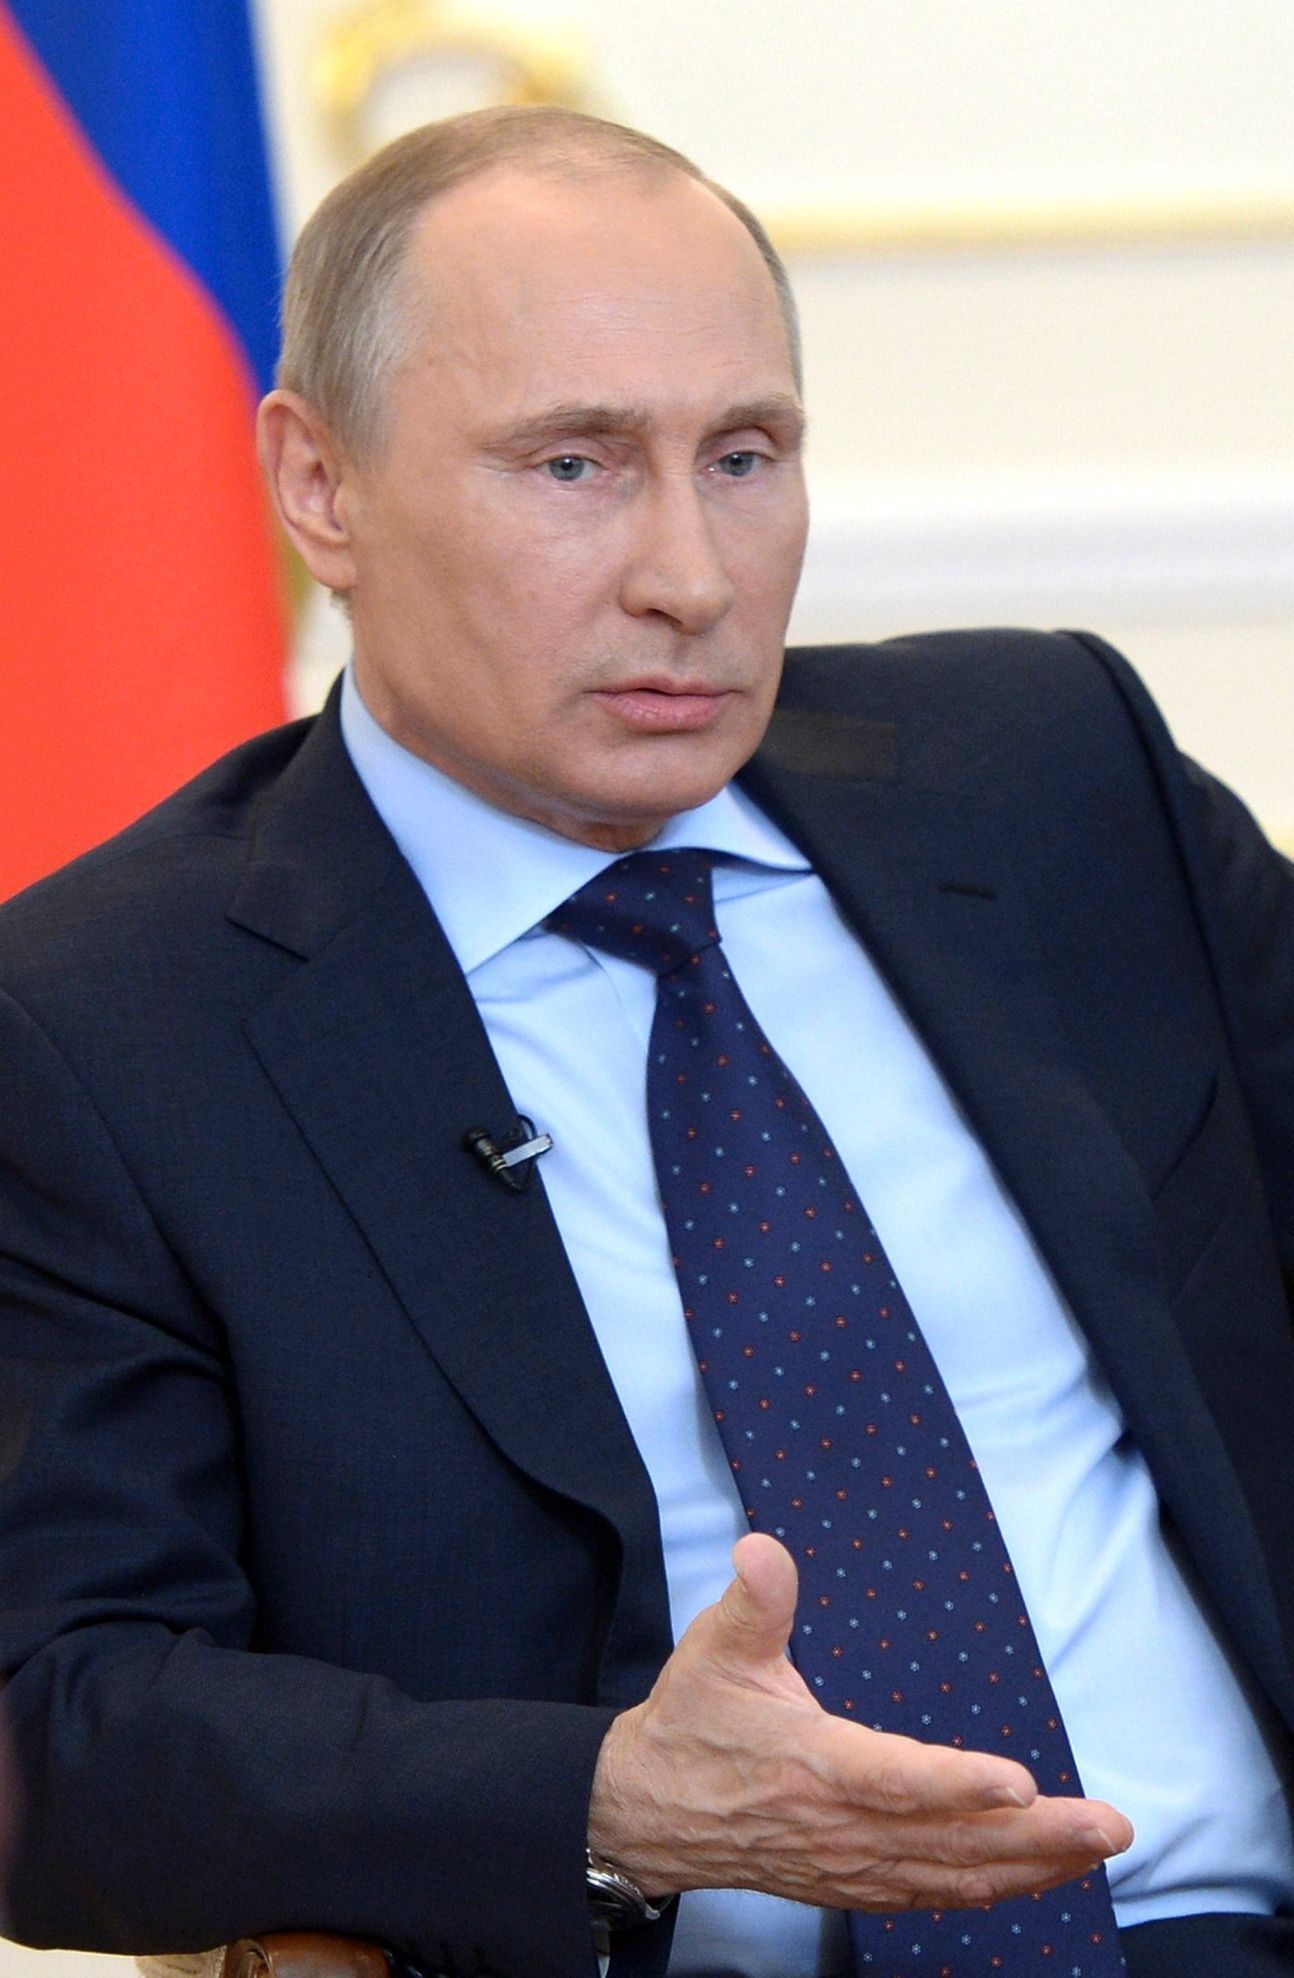 Ruský prezident Vladimir Putin během tiskové konference na Krymu